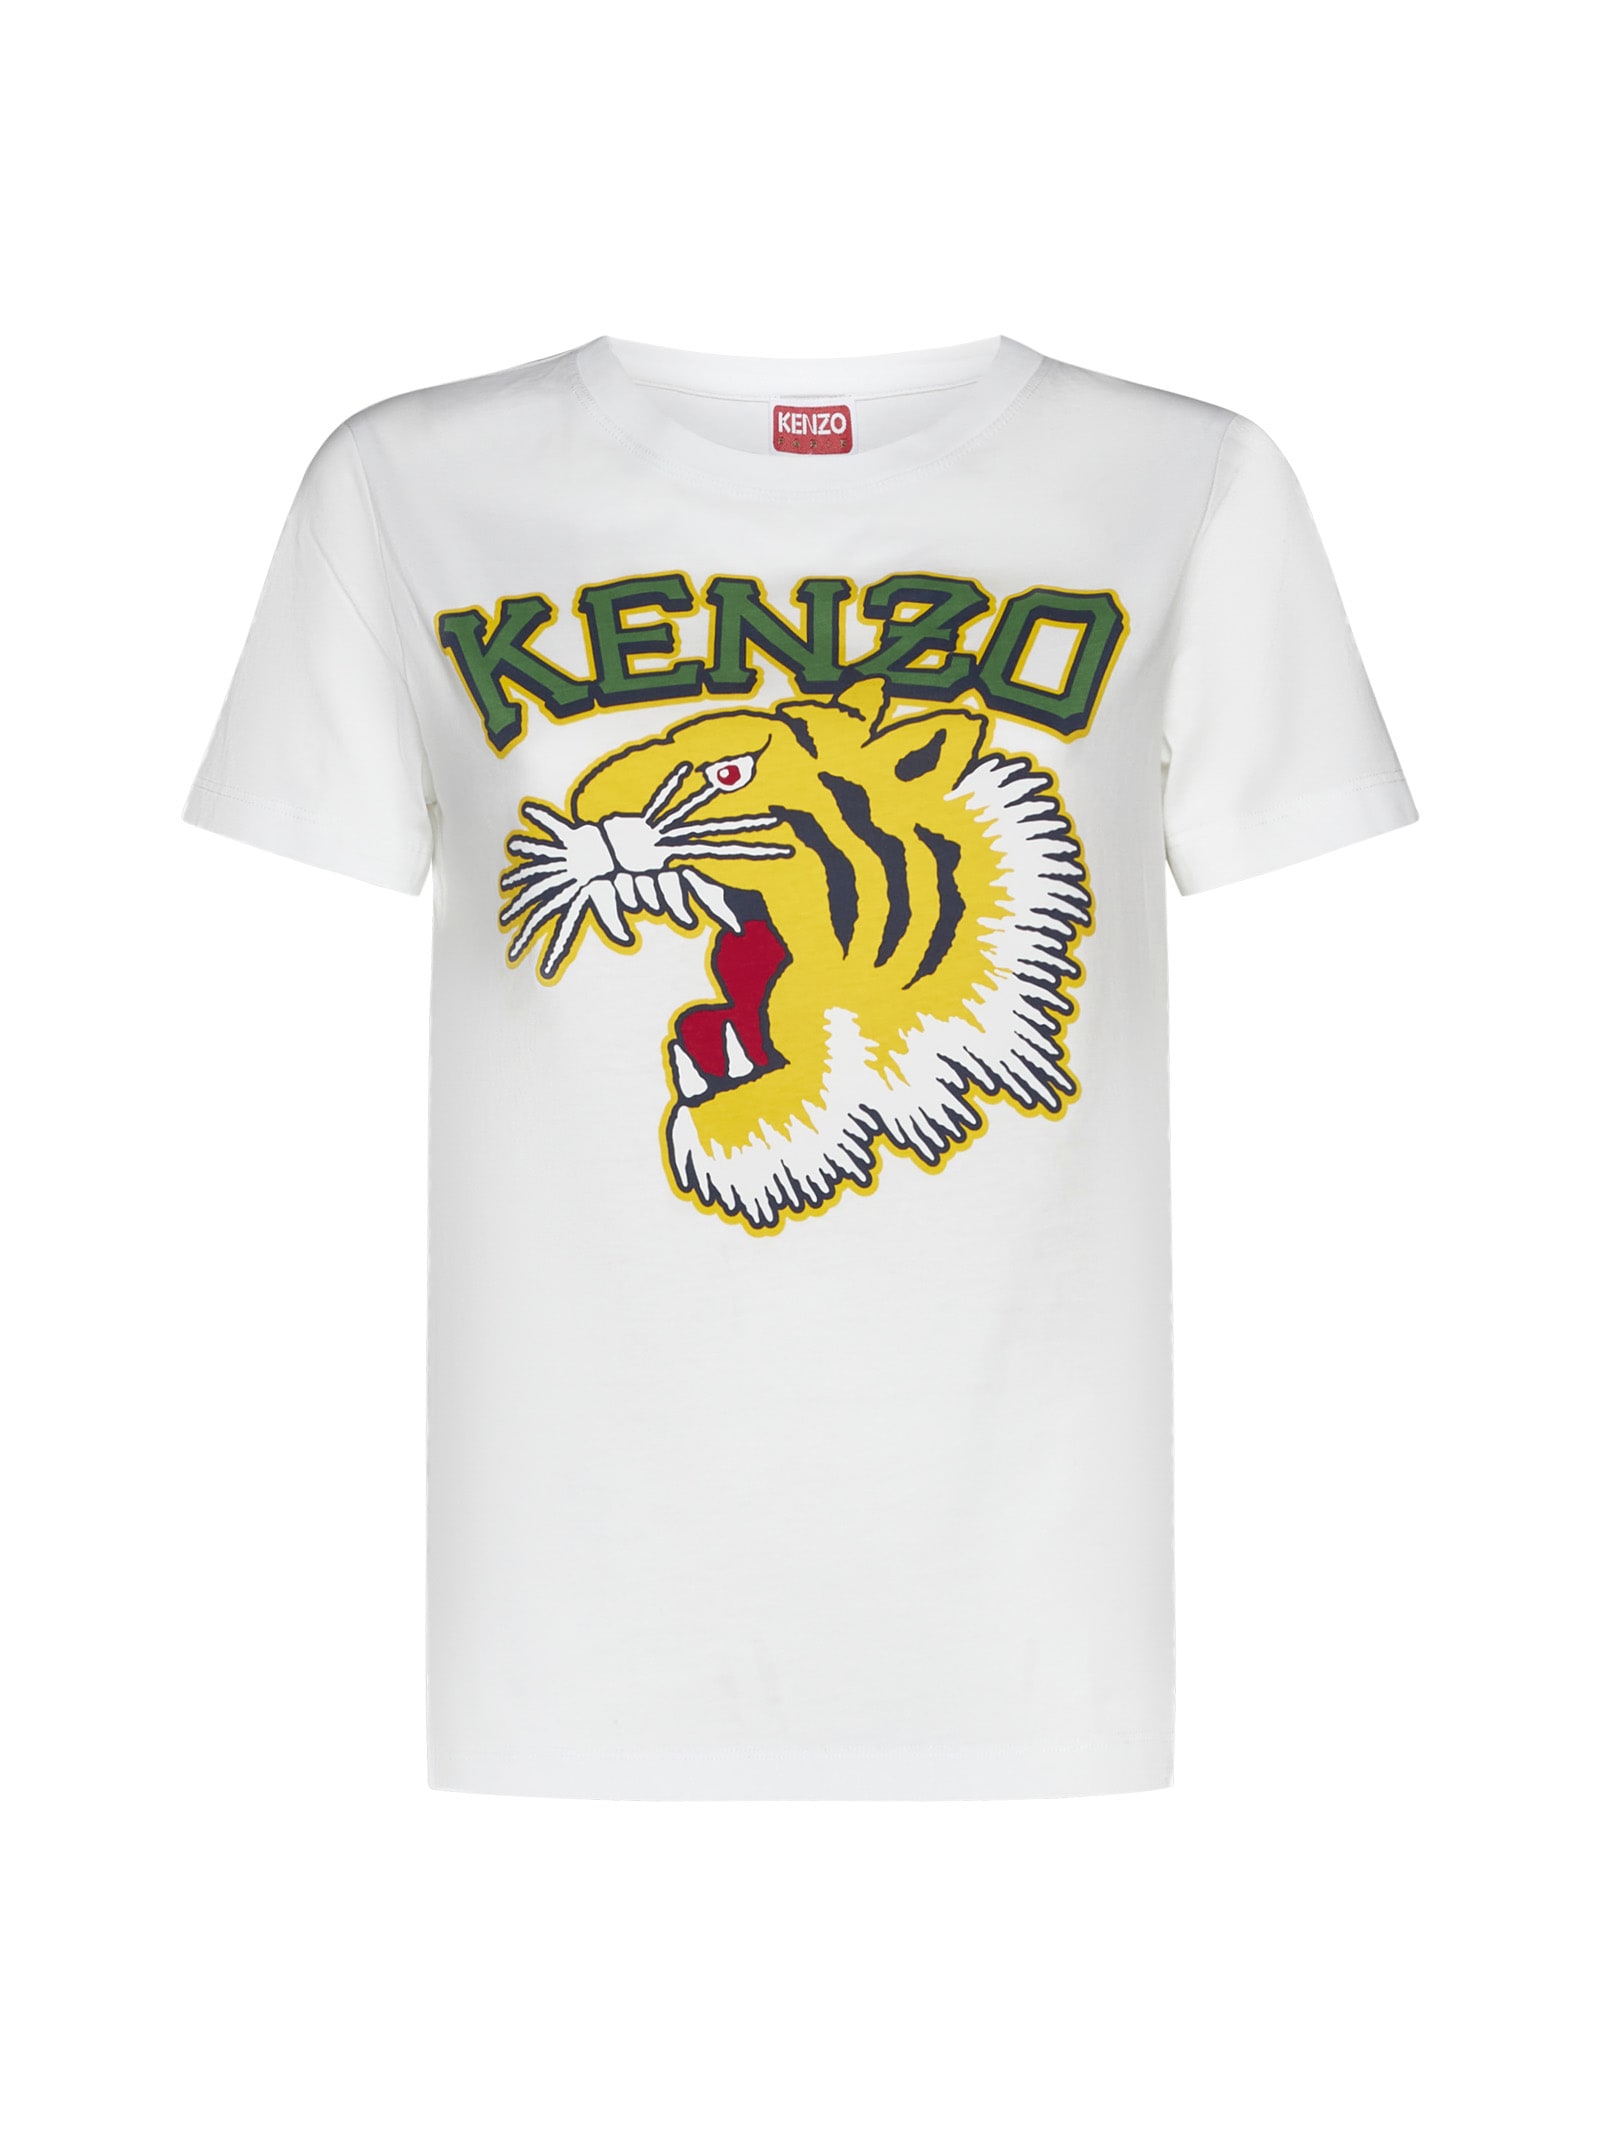 Tiger Varsity Classic T-shirt